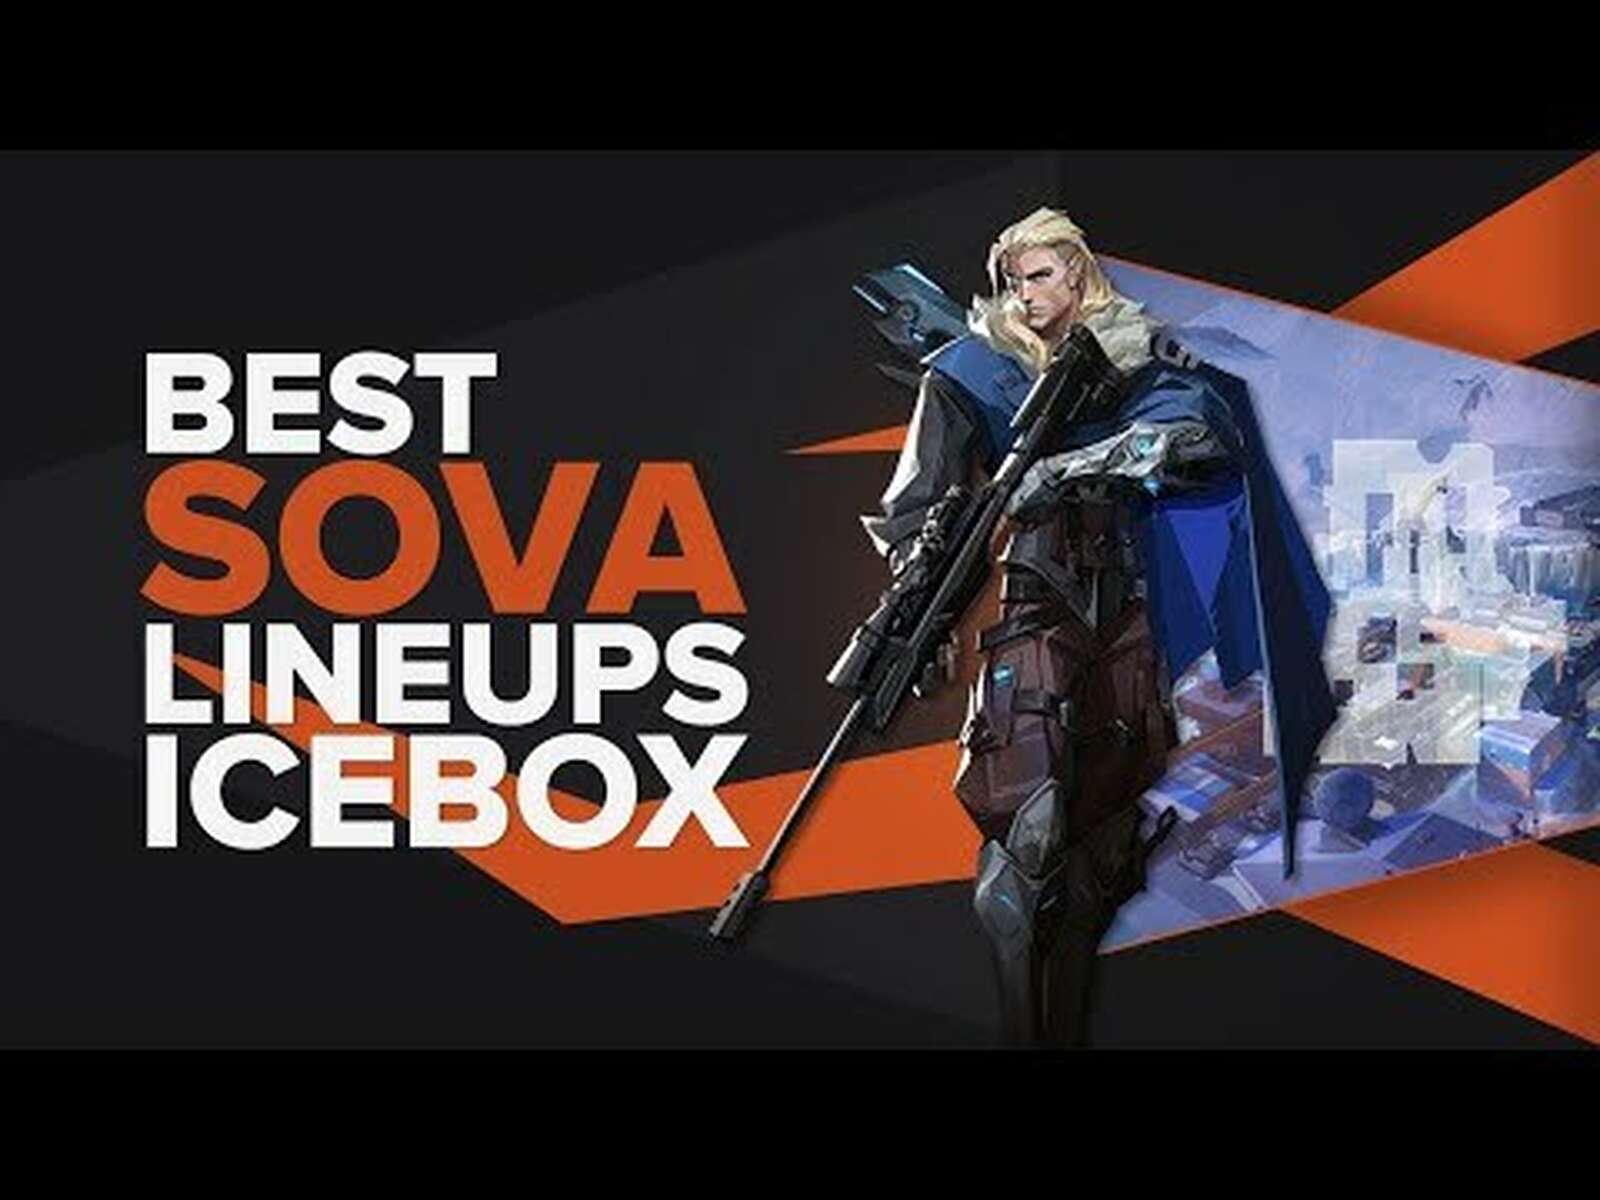 The Best Sova Lineups on Icebox